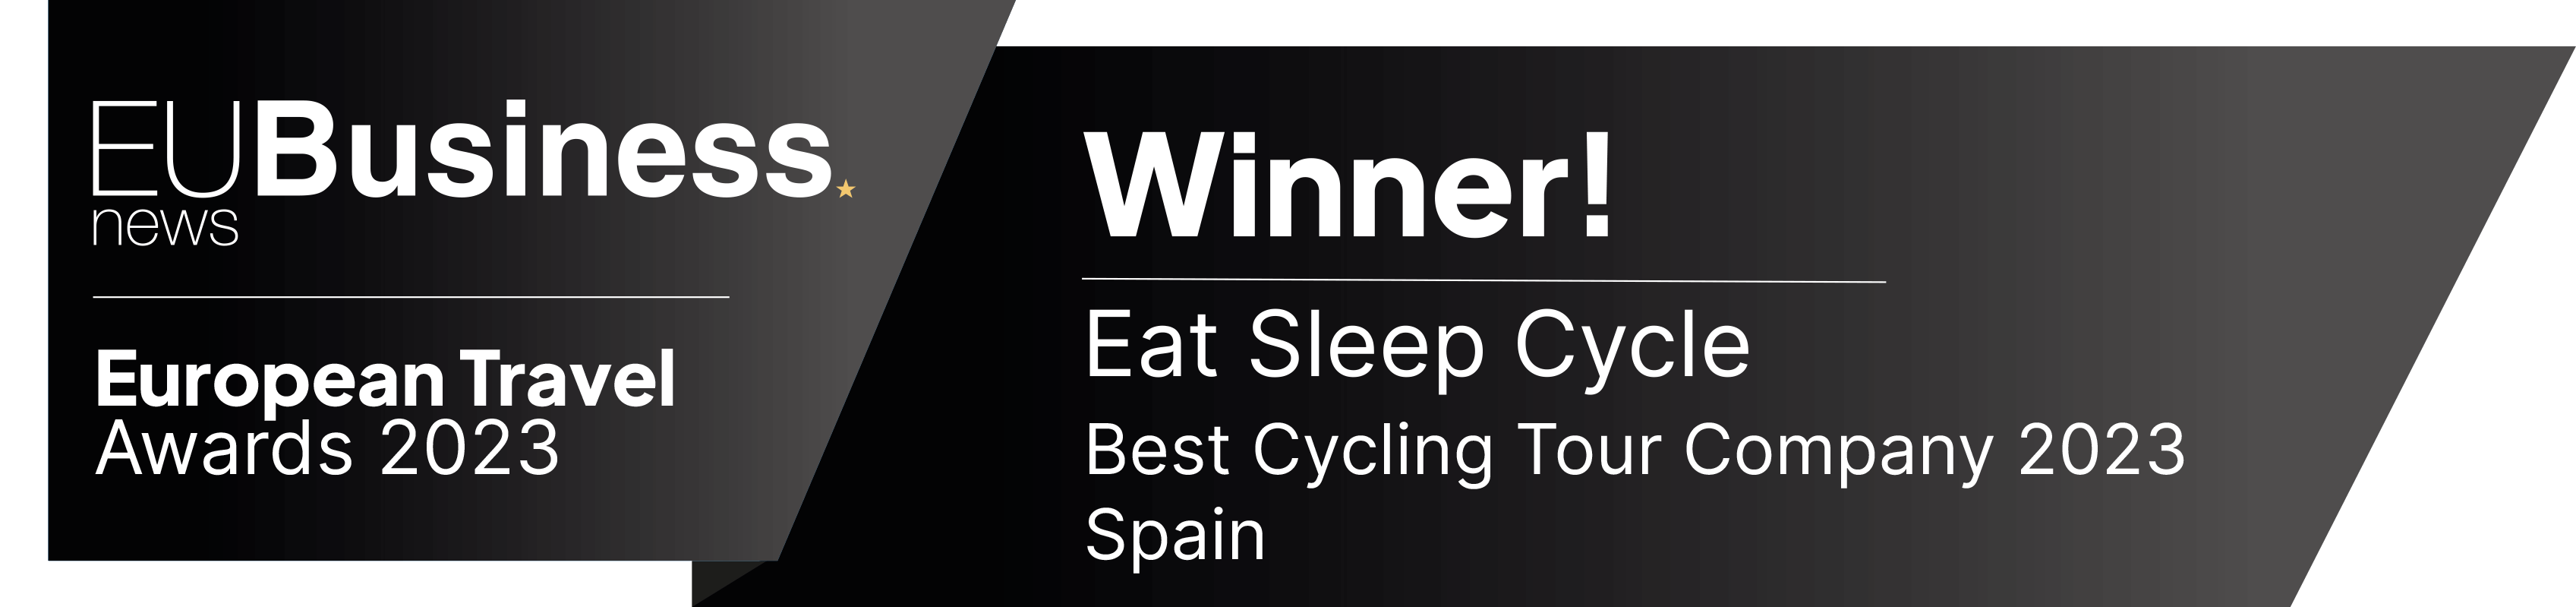 Business winner awards EAT SLEEP CYCLE